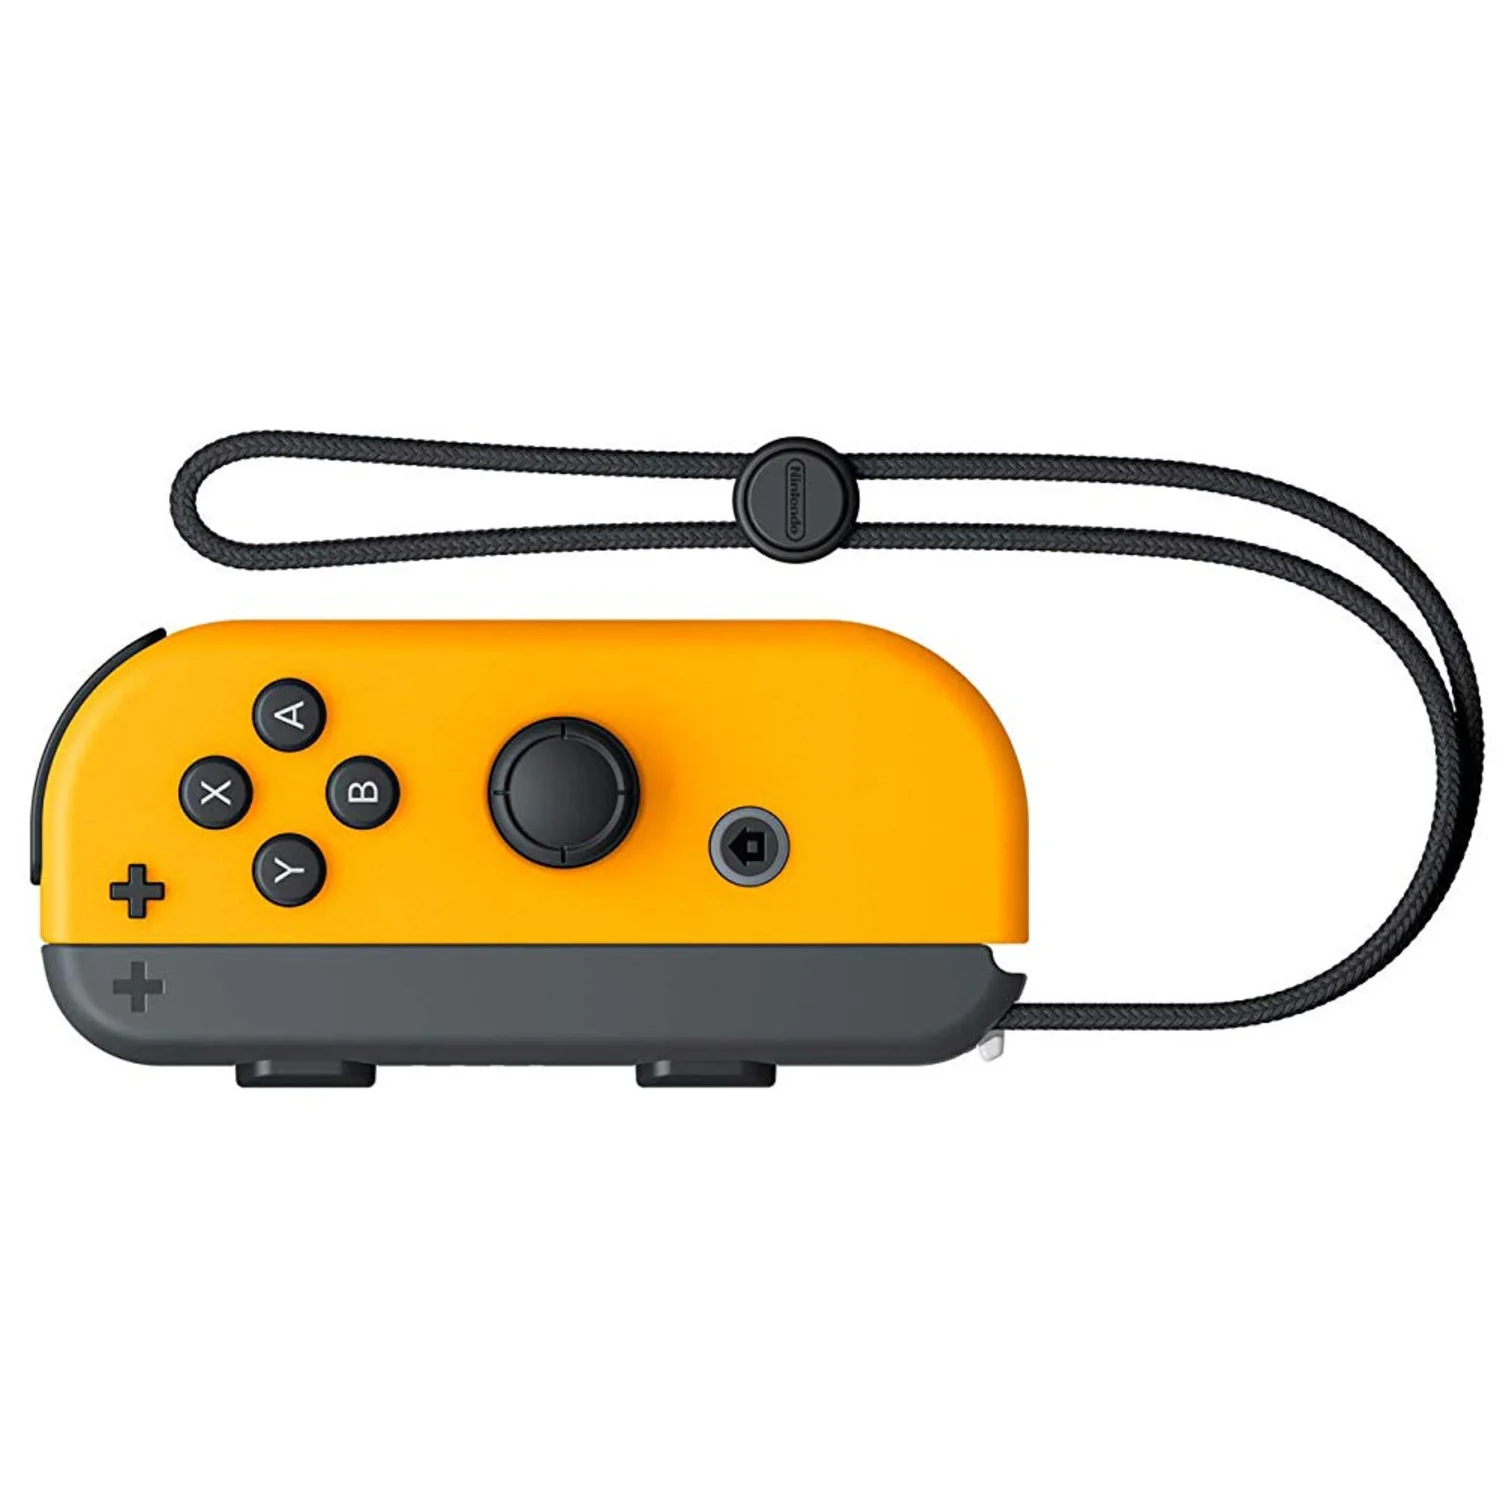 Controles Joy-Con L e R para Nintendo Switch - Laranja e roxo